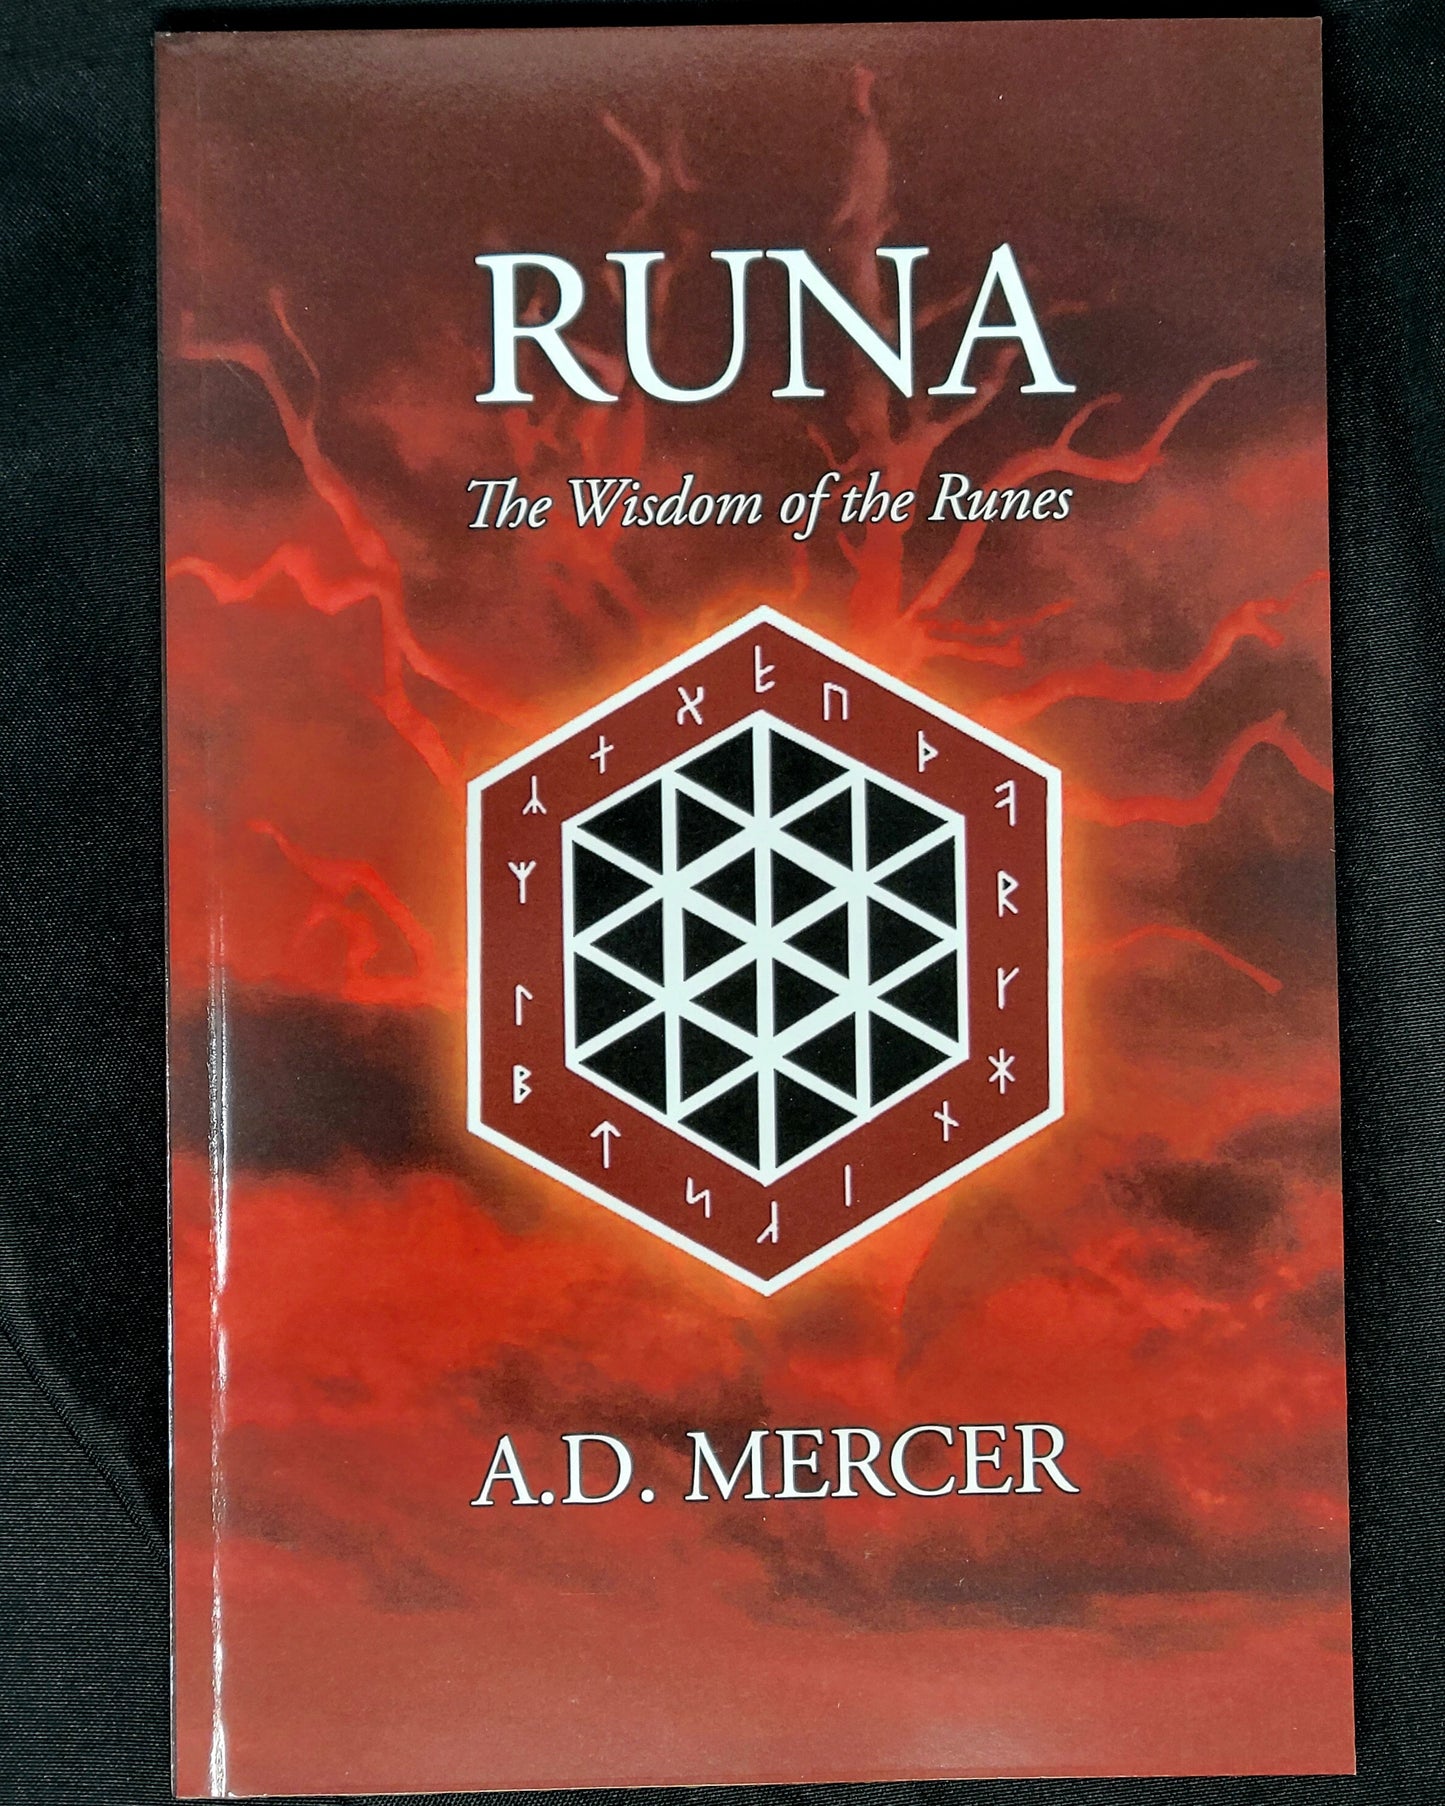 Runa The Wisdom of the Runes by A.D. Mercer